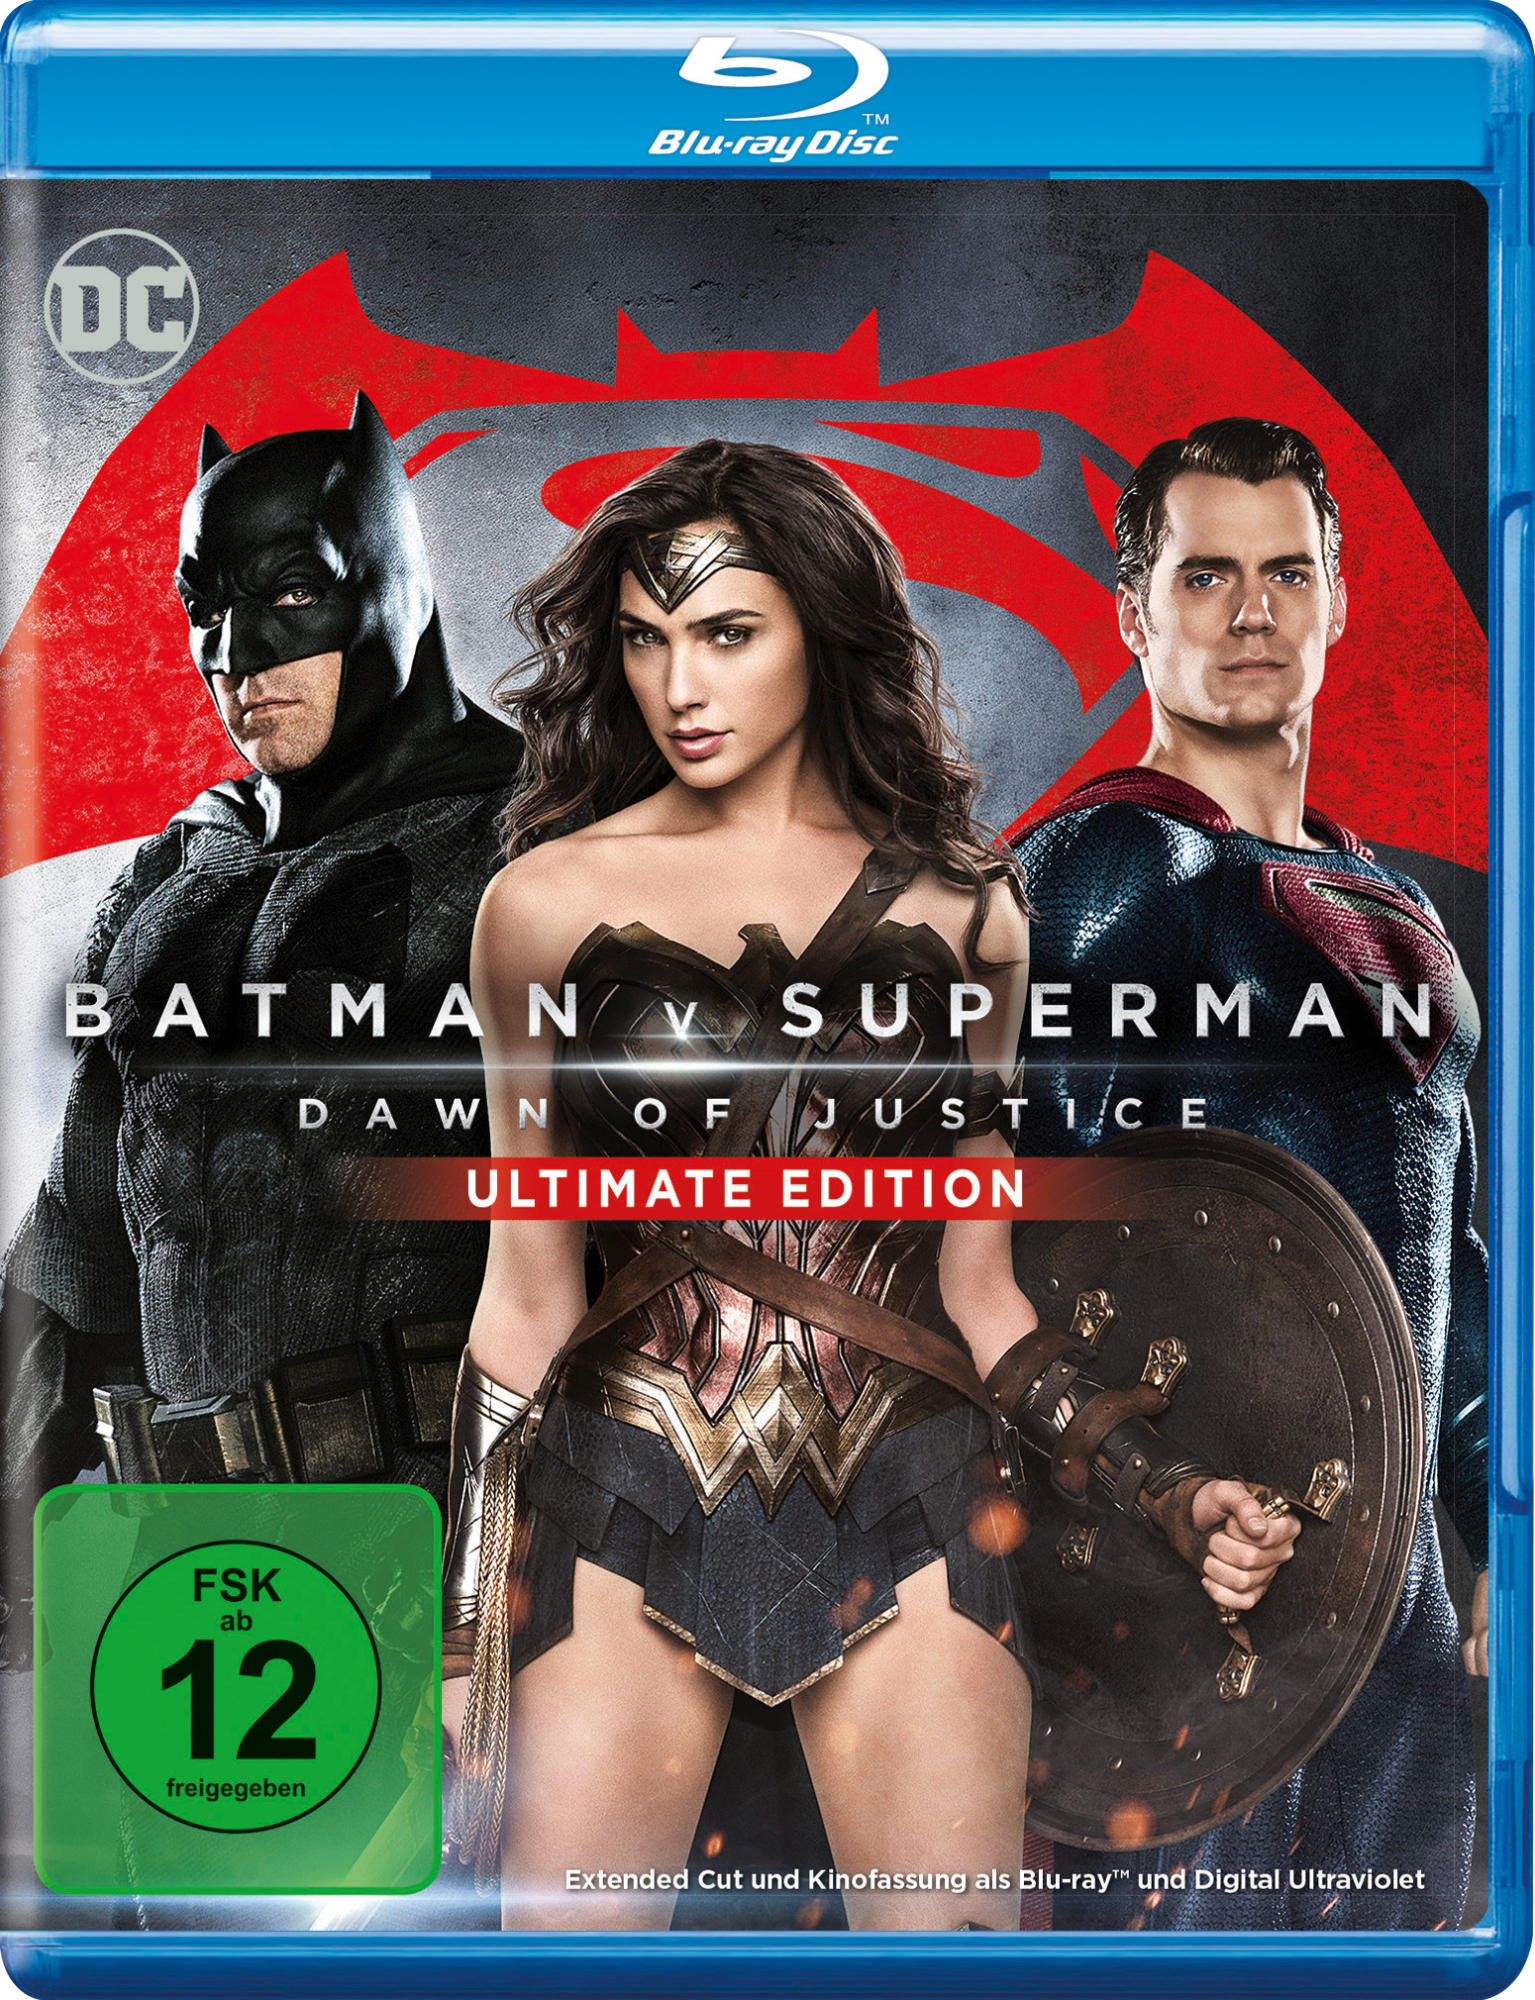 Justice Batman v Edition) (Ultimate Blu-ray of Superman: Dawn